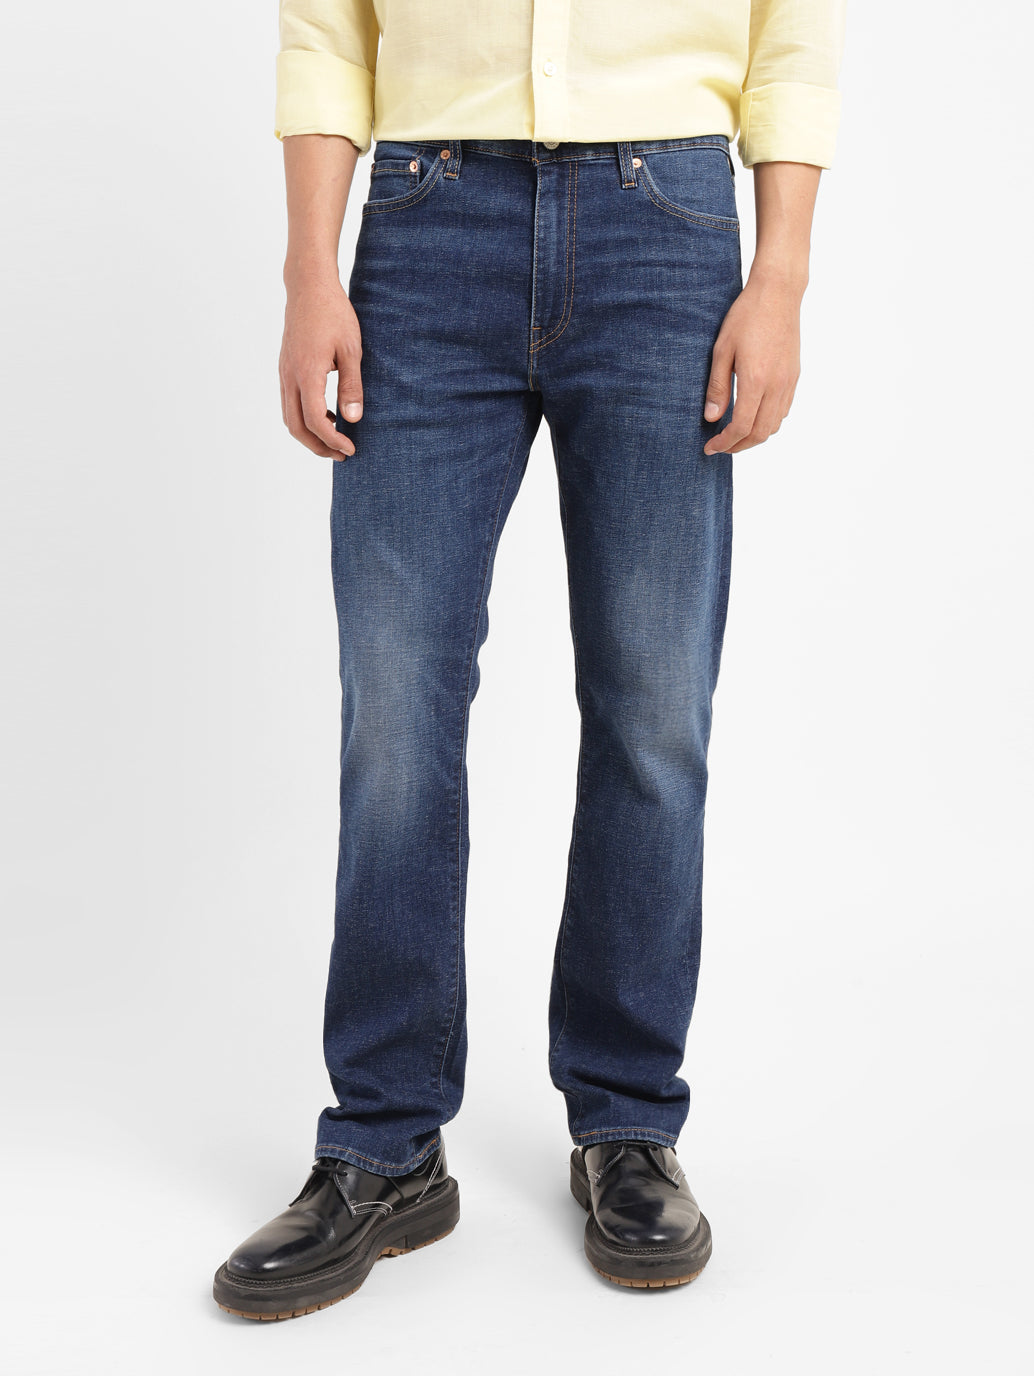 Men's 513 Dark Indigo Slim Fit Jeans